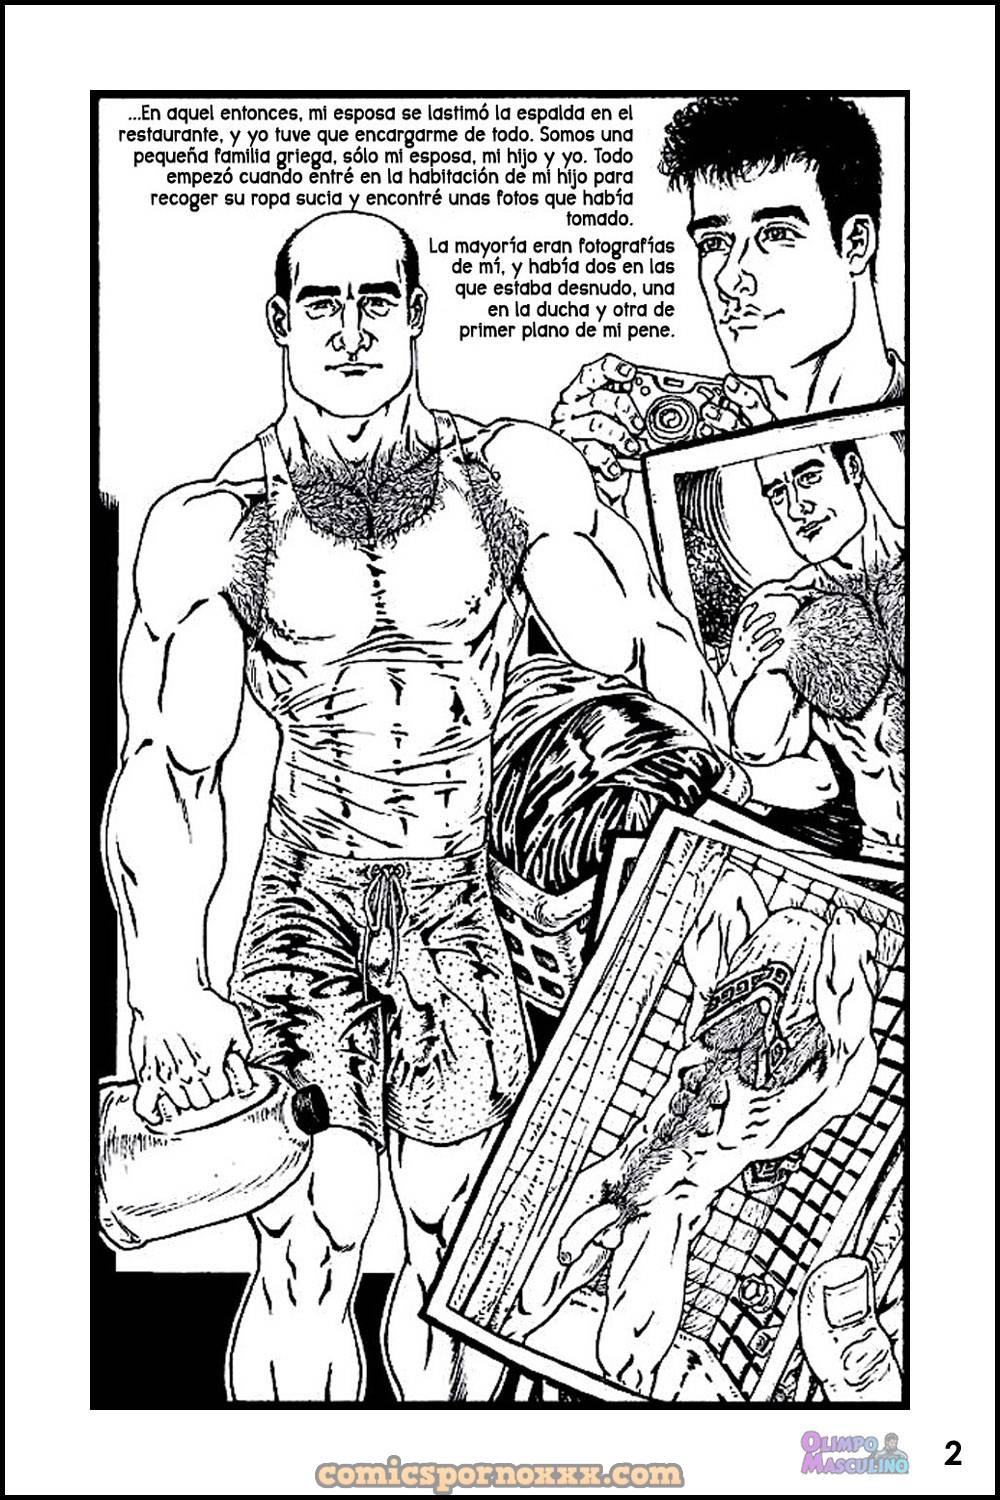 Un Cuento Griego #1 - 2 - Comics Porno - Hentai Manga - Cartoon XXX